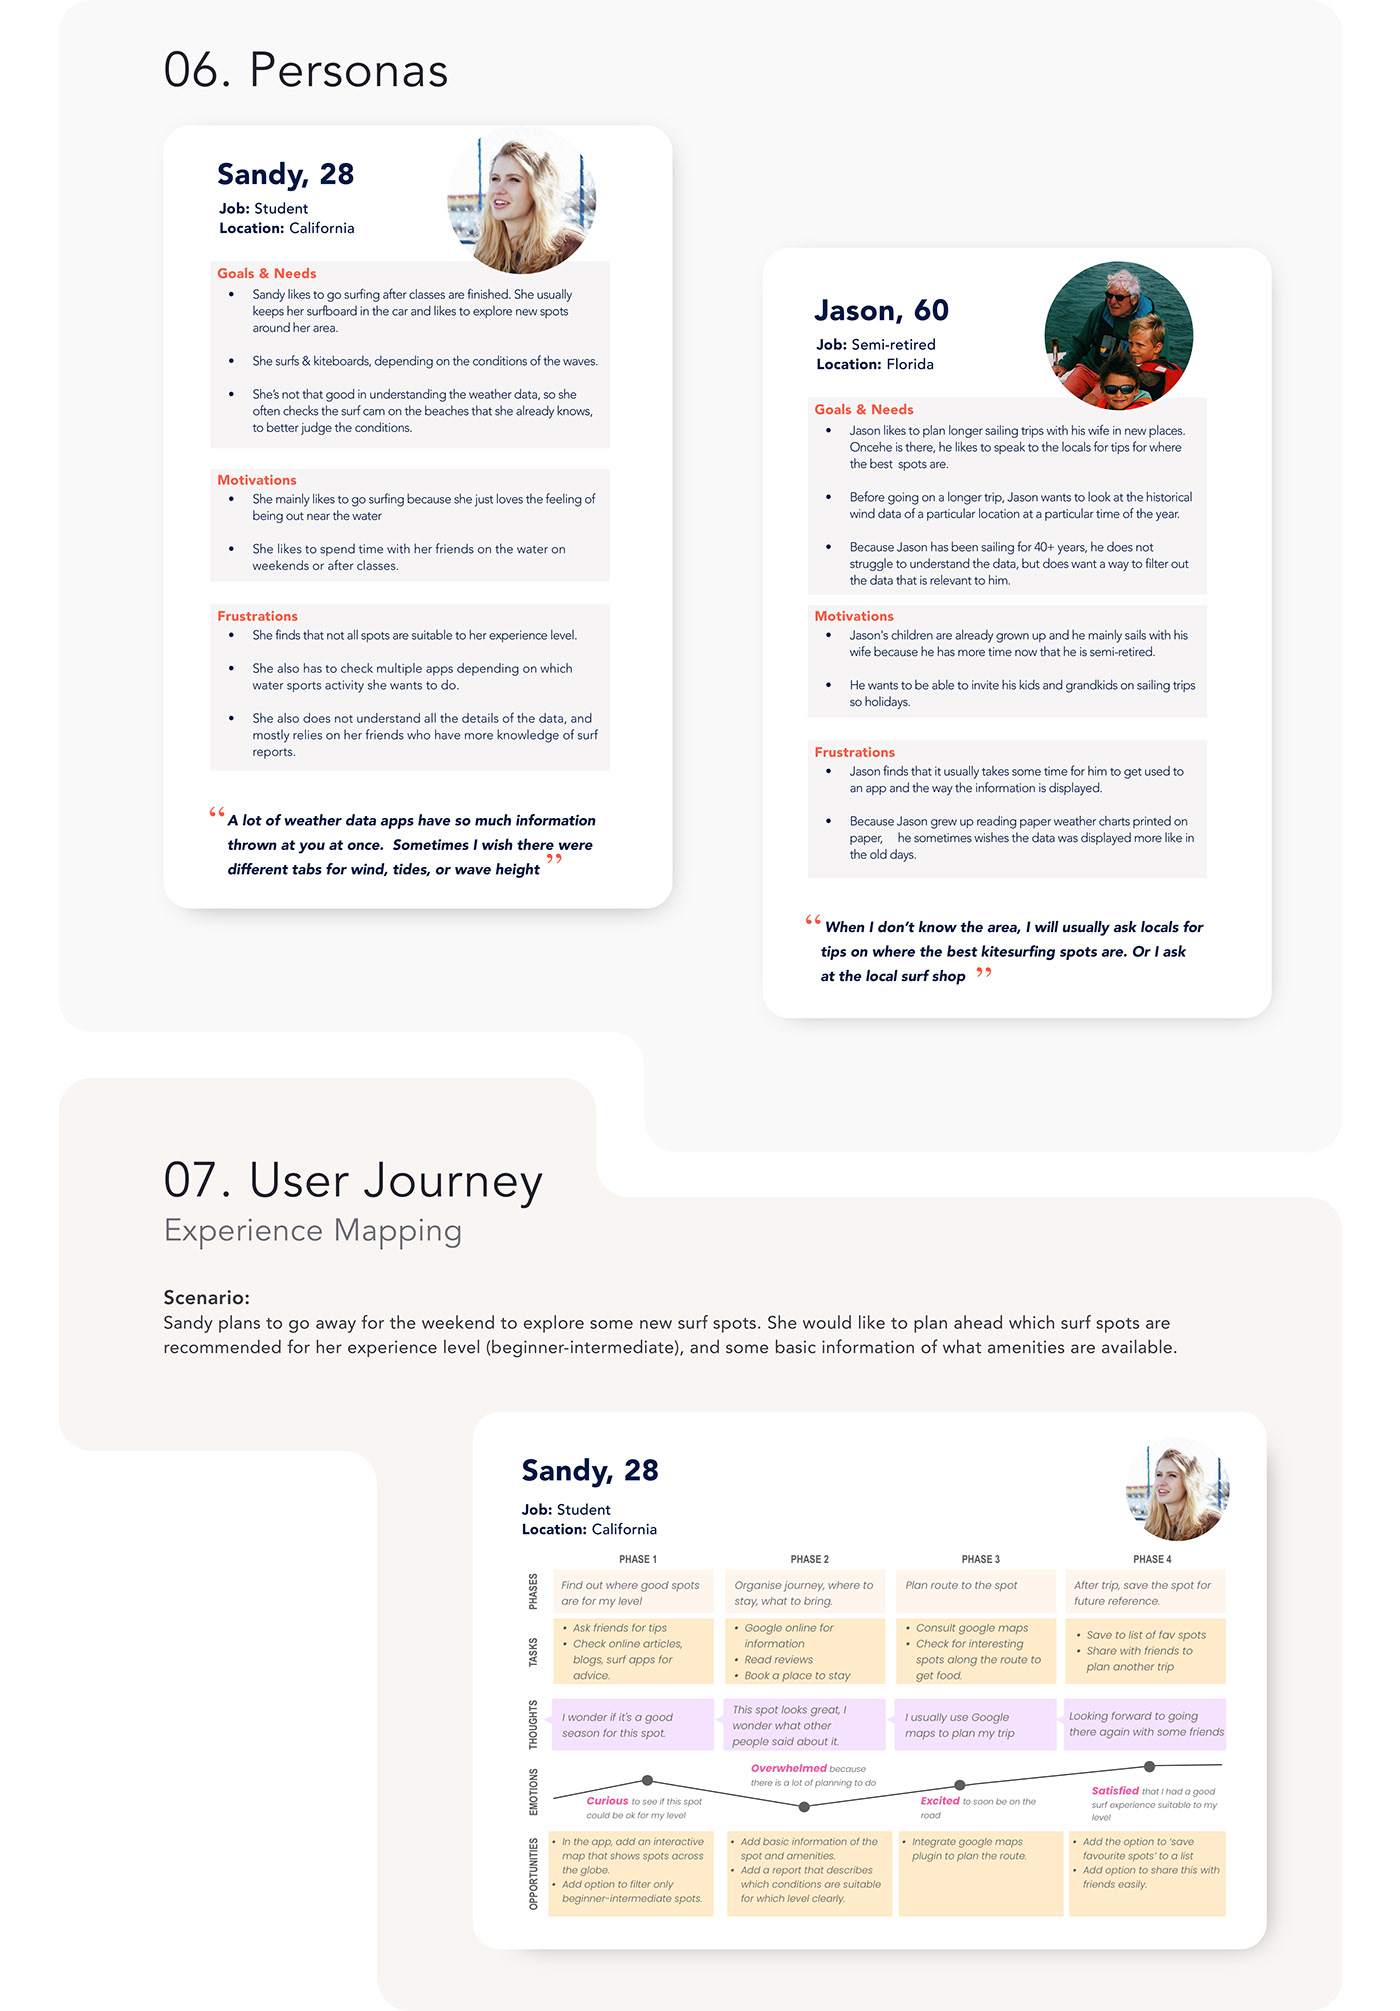 design design thinking mobile UI ux UX Case Study Web